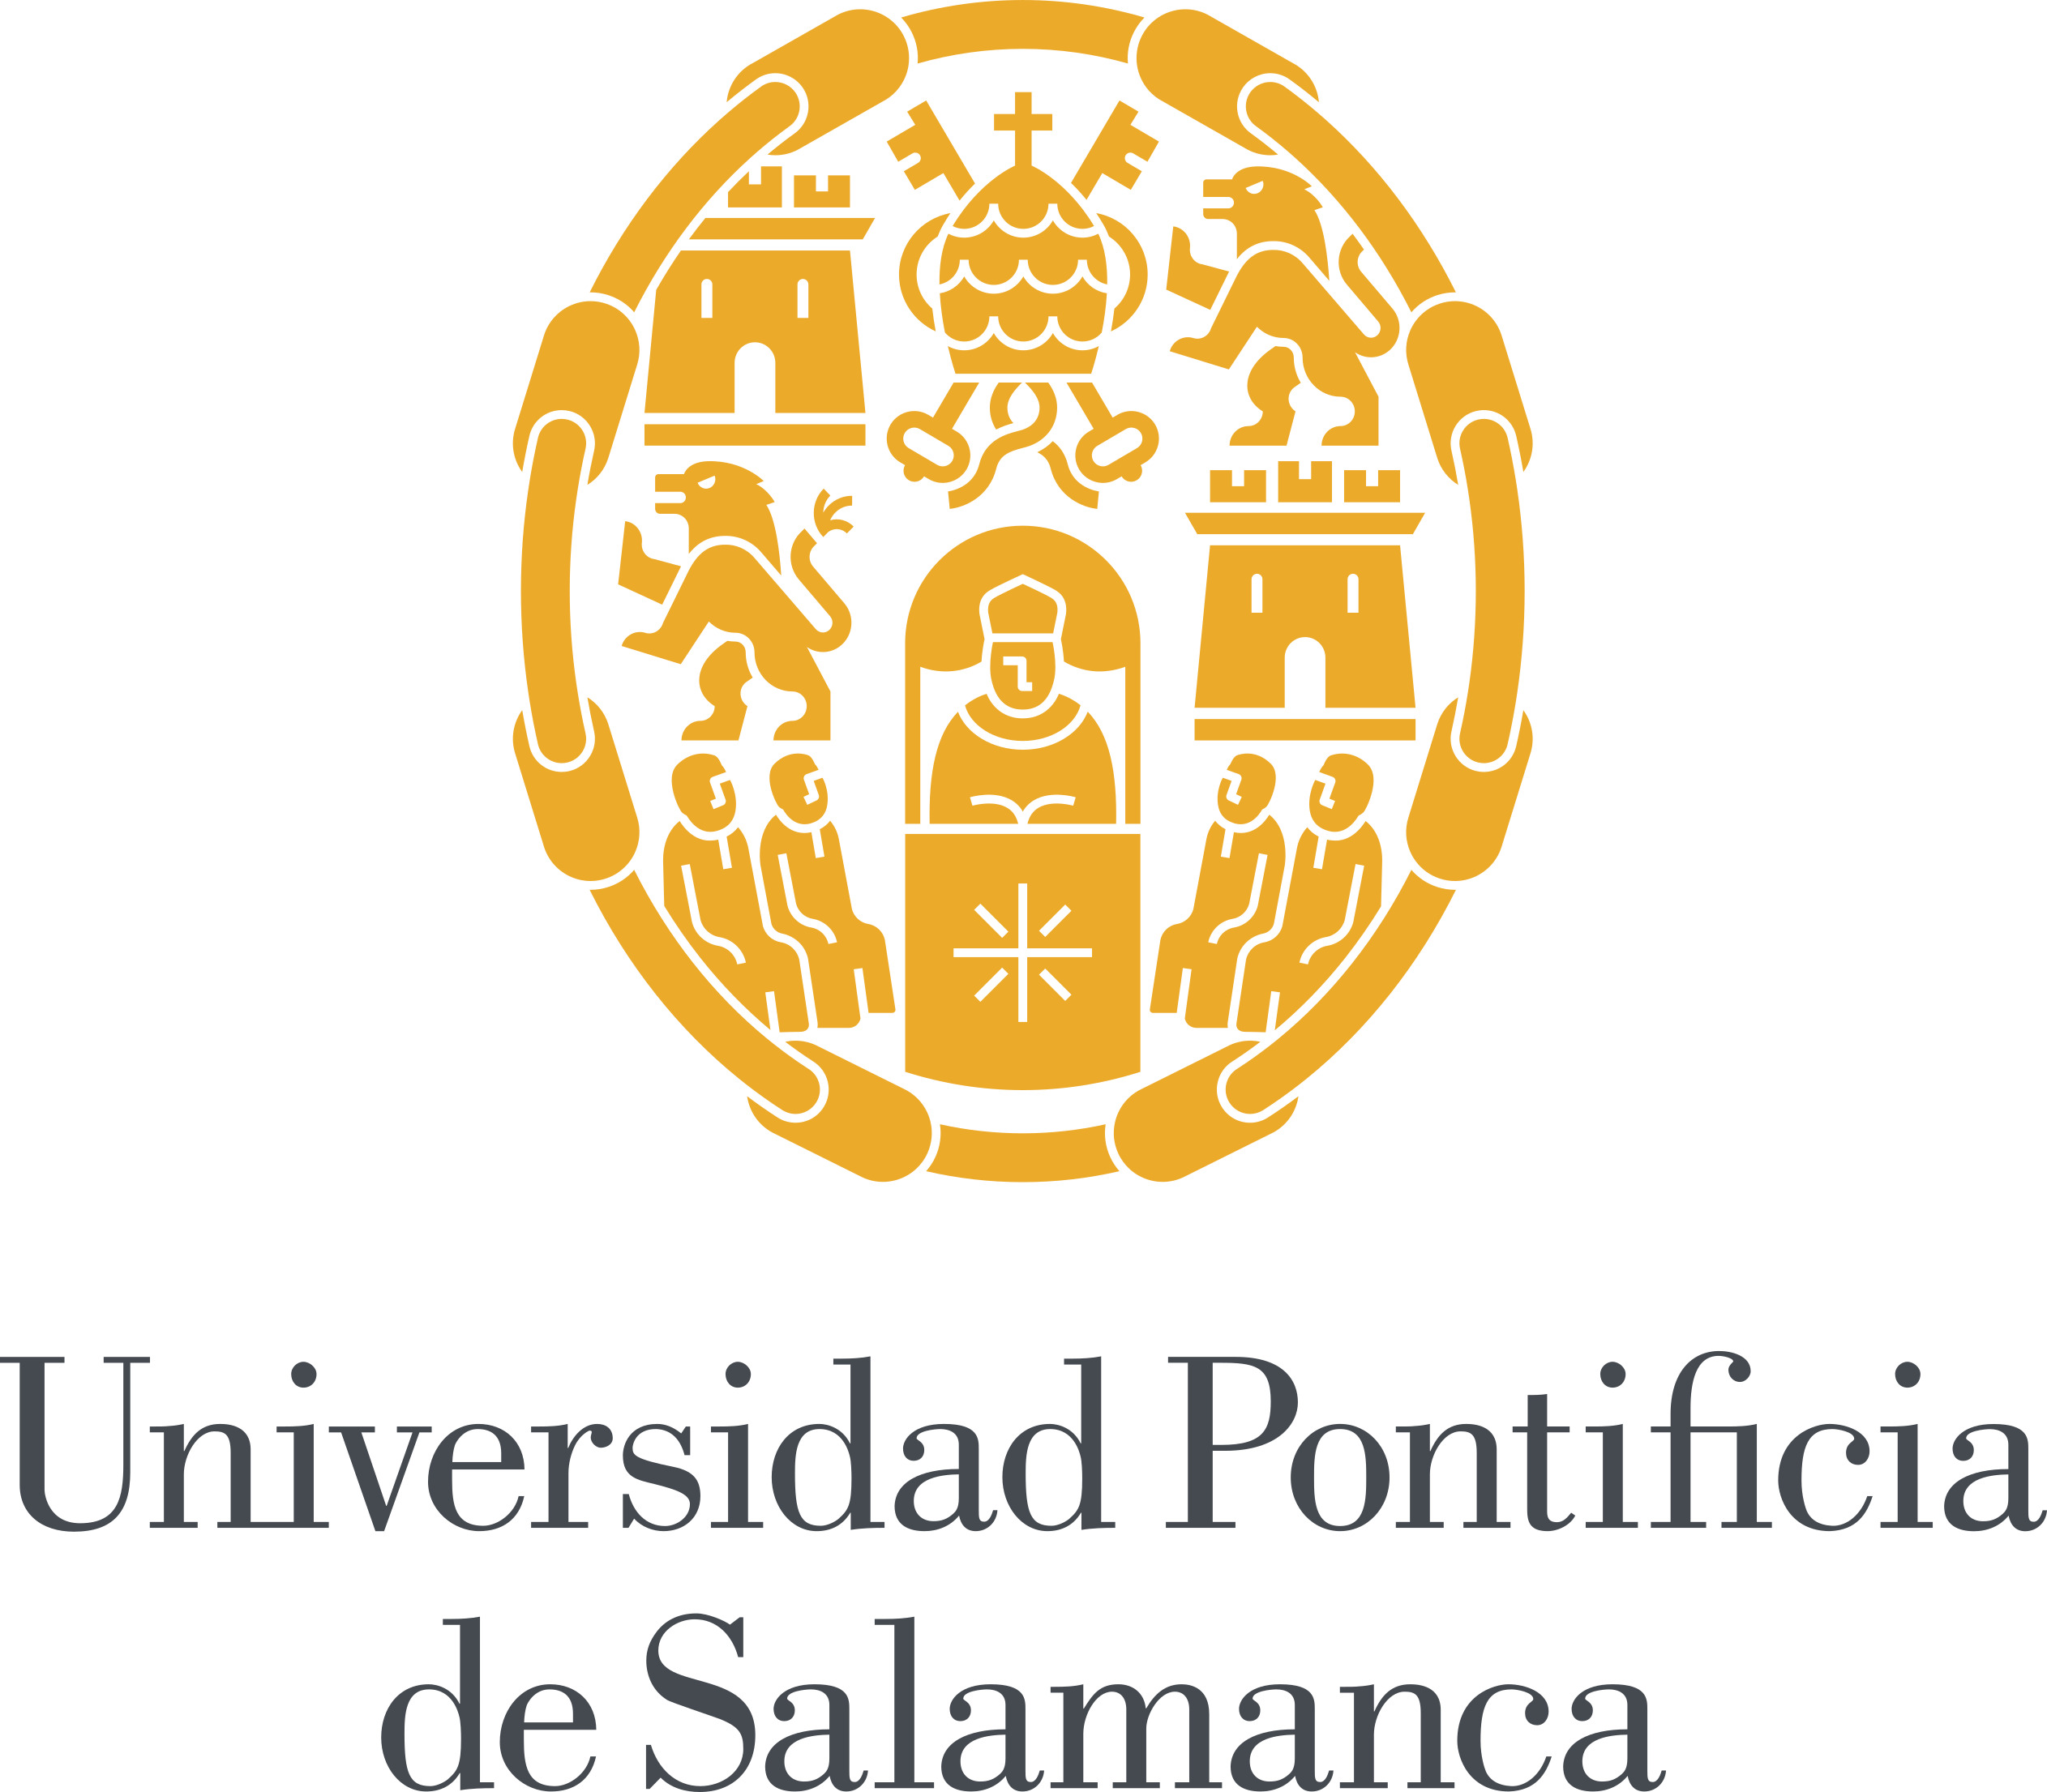 Logo of the Pontifical University of Salamanca, collaborator of Hispania escuela de español